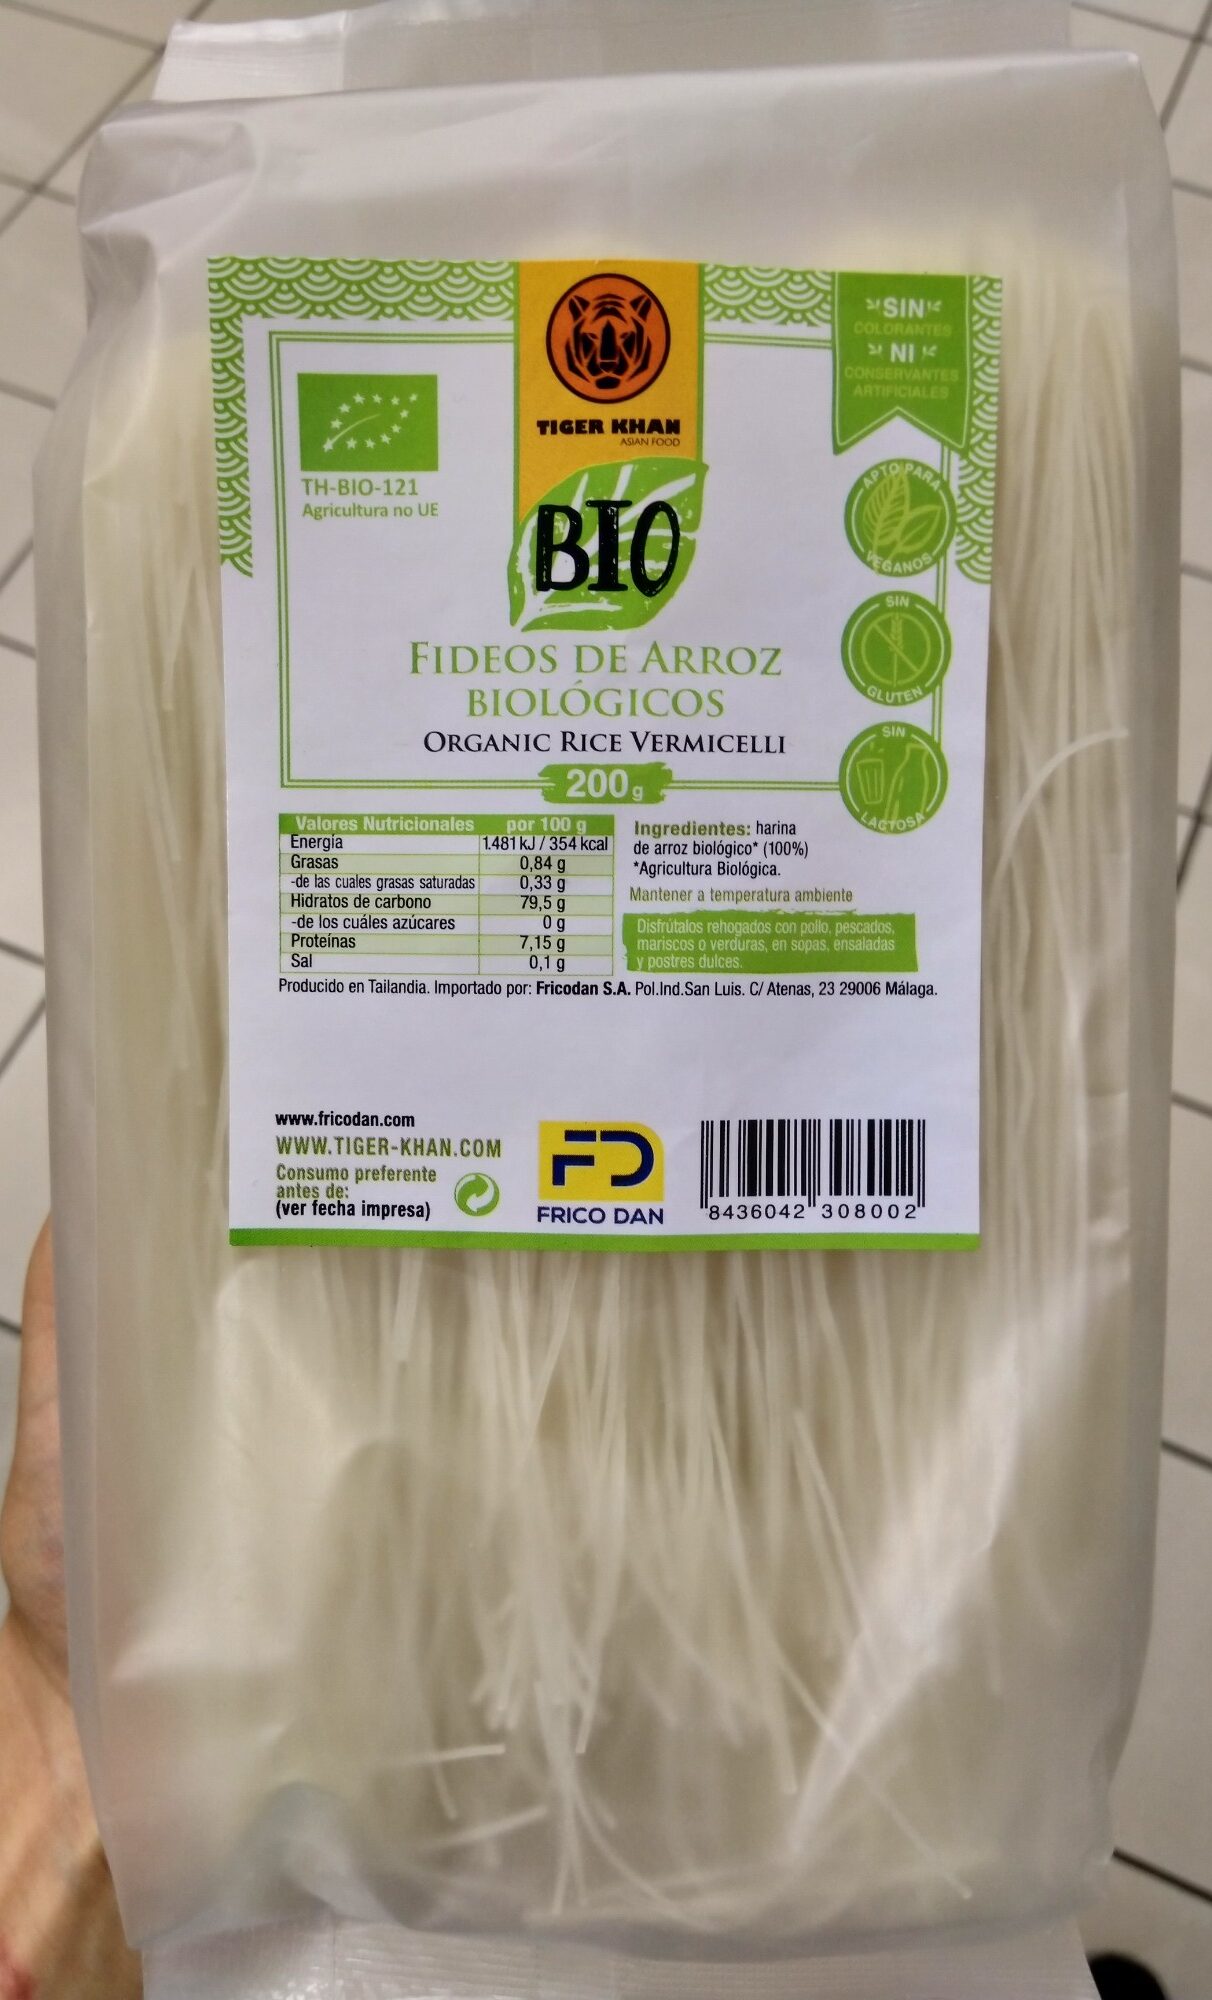 Fideos de arroz biológicos - Product - es